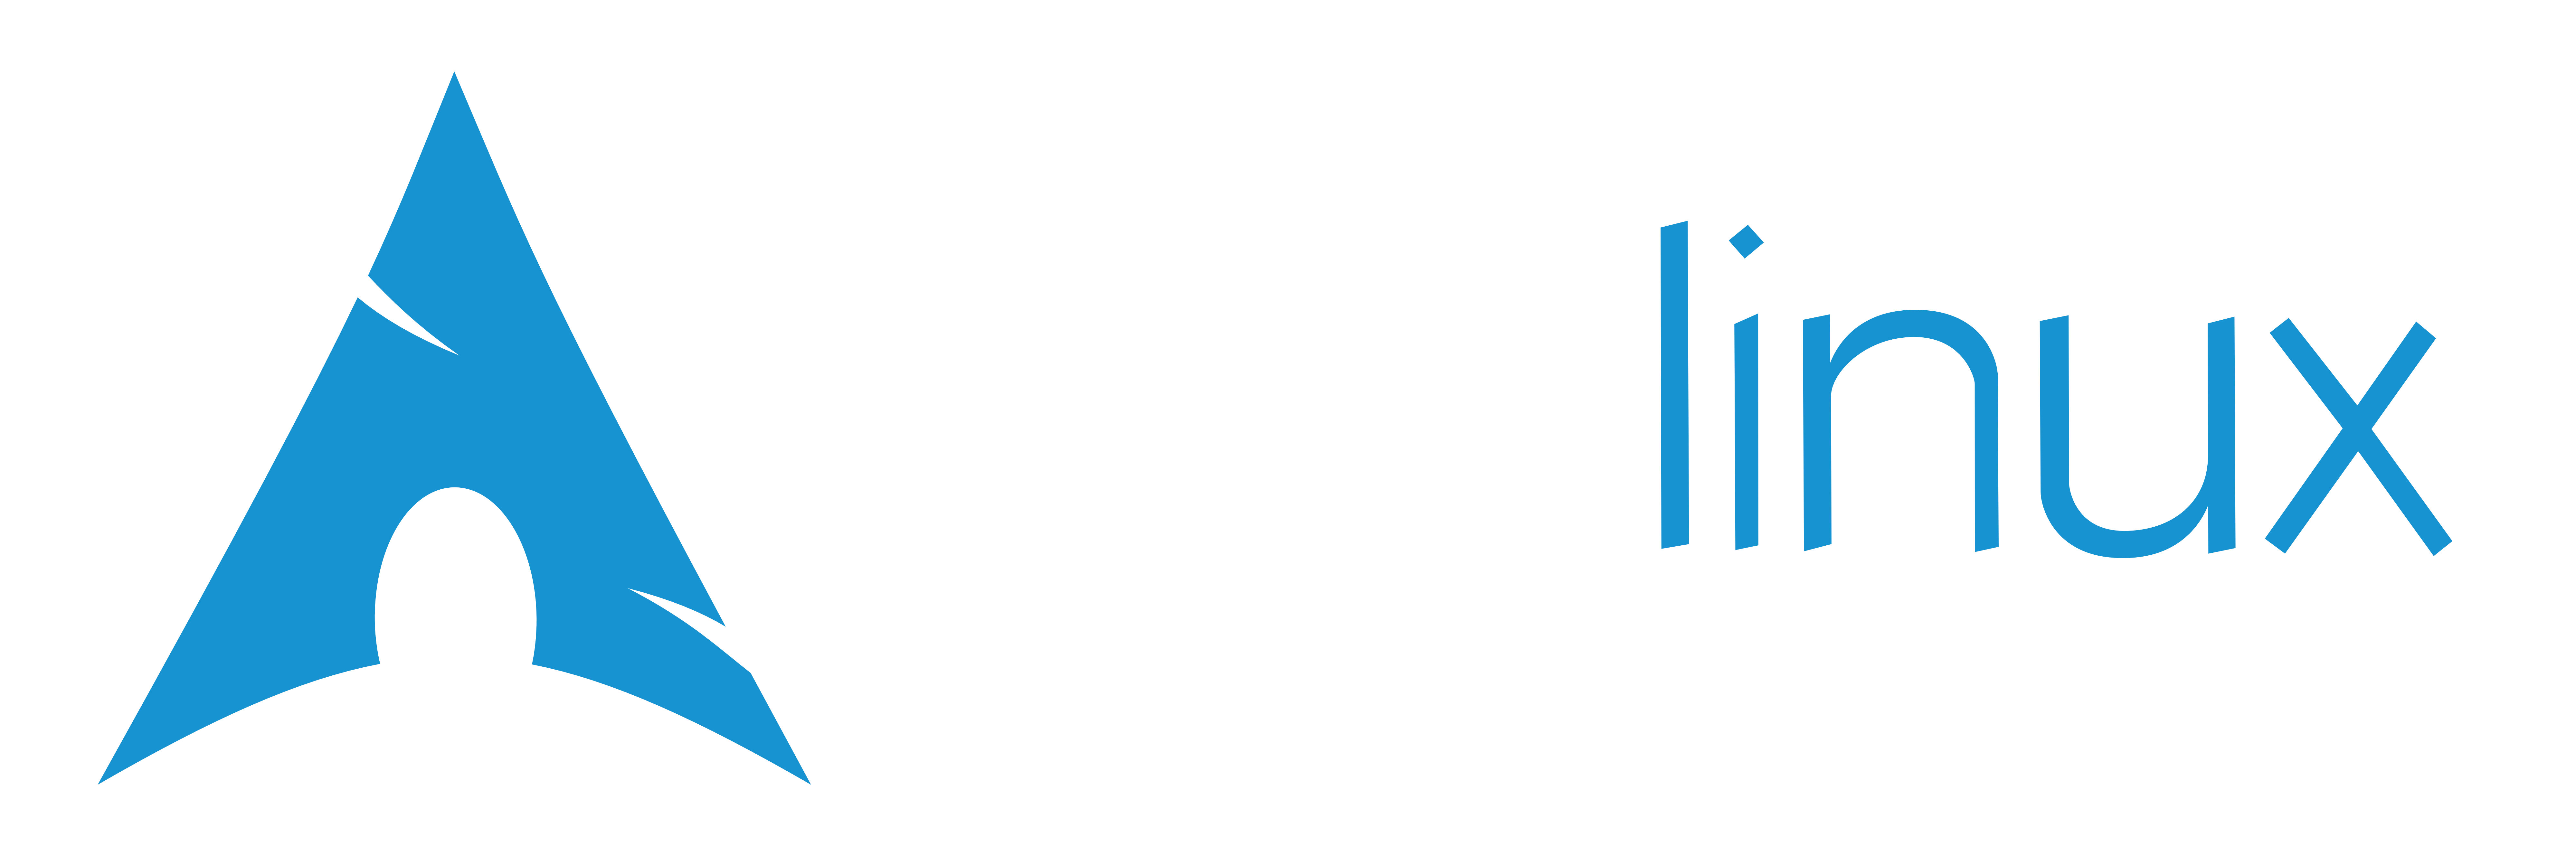 Archlinux-logo-light-1200dpi.7ccd81fd52dc.png